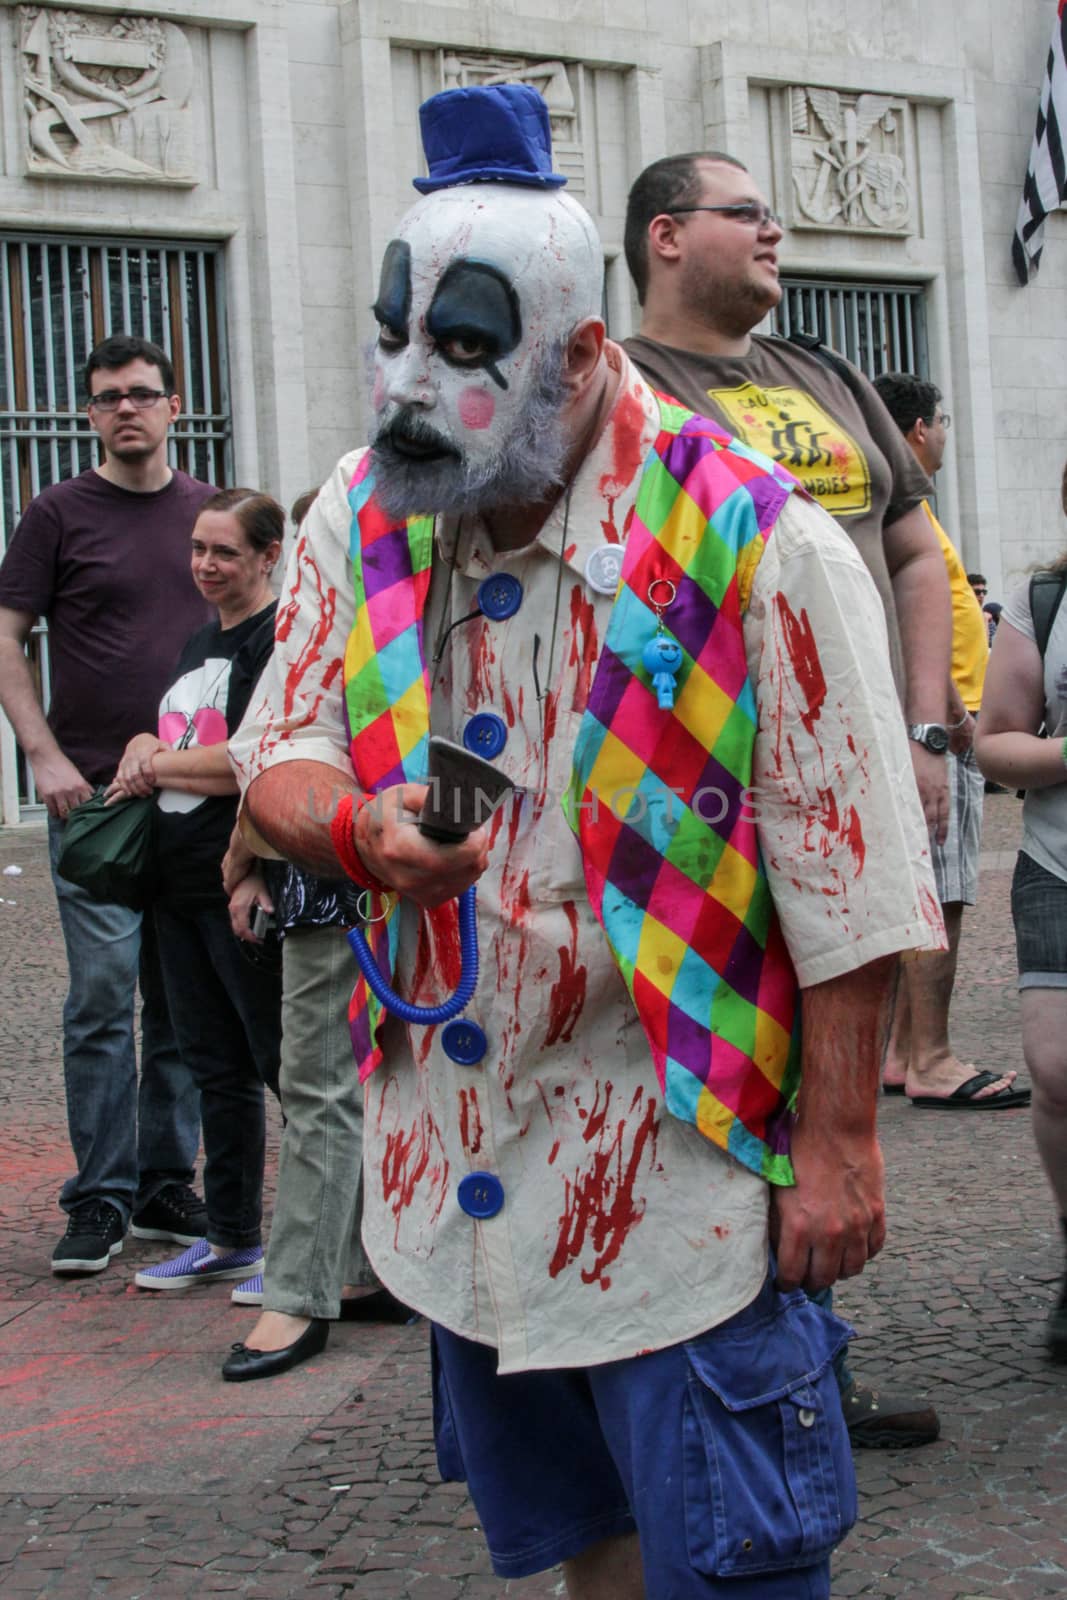 Sao Paulo, Brazil November 11 2015: An unidentified man in clown costumes in the annual event Zombie Walk in Sao Paulo Brazil.